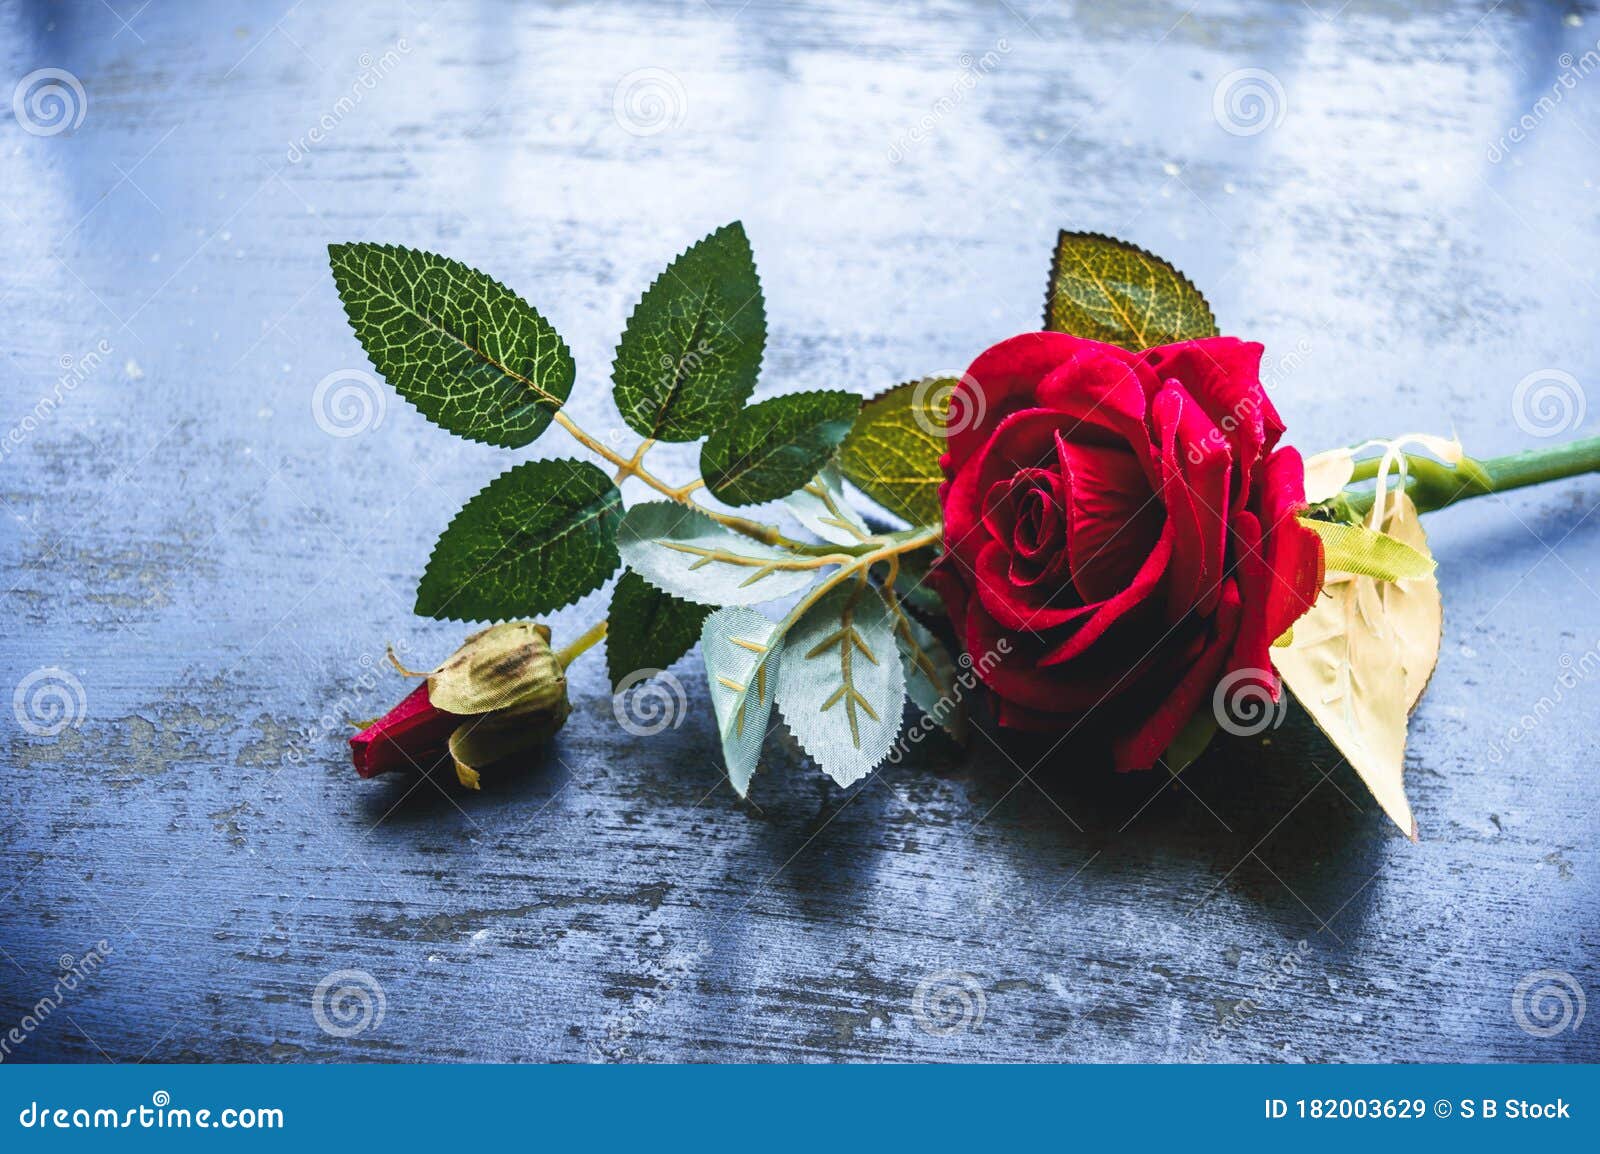 Red Rose Flower on Rustic Floor. Nature Still Life Love Romantic ...